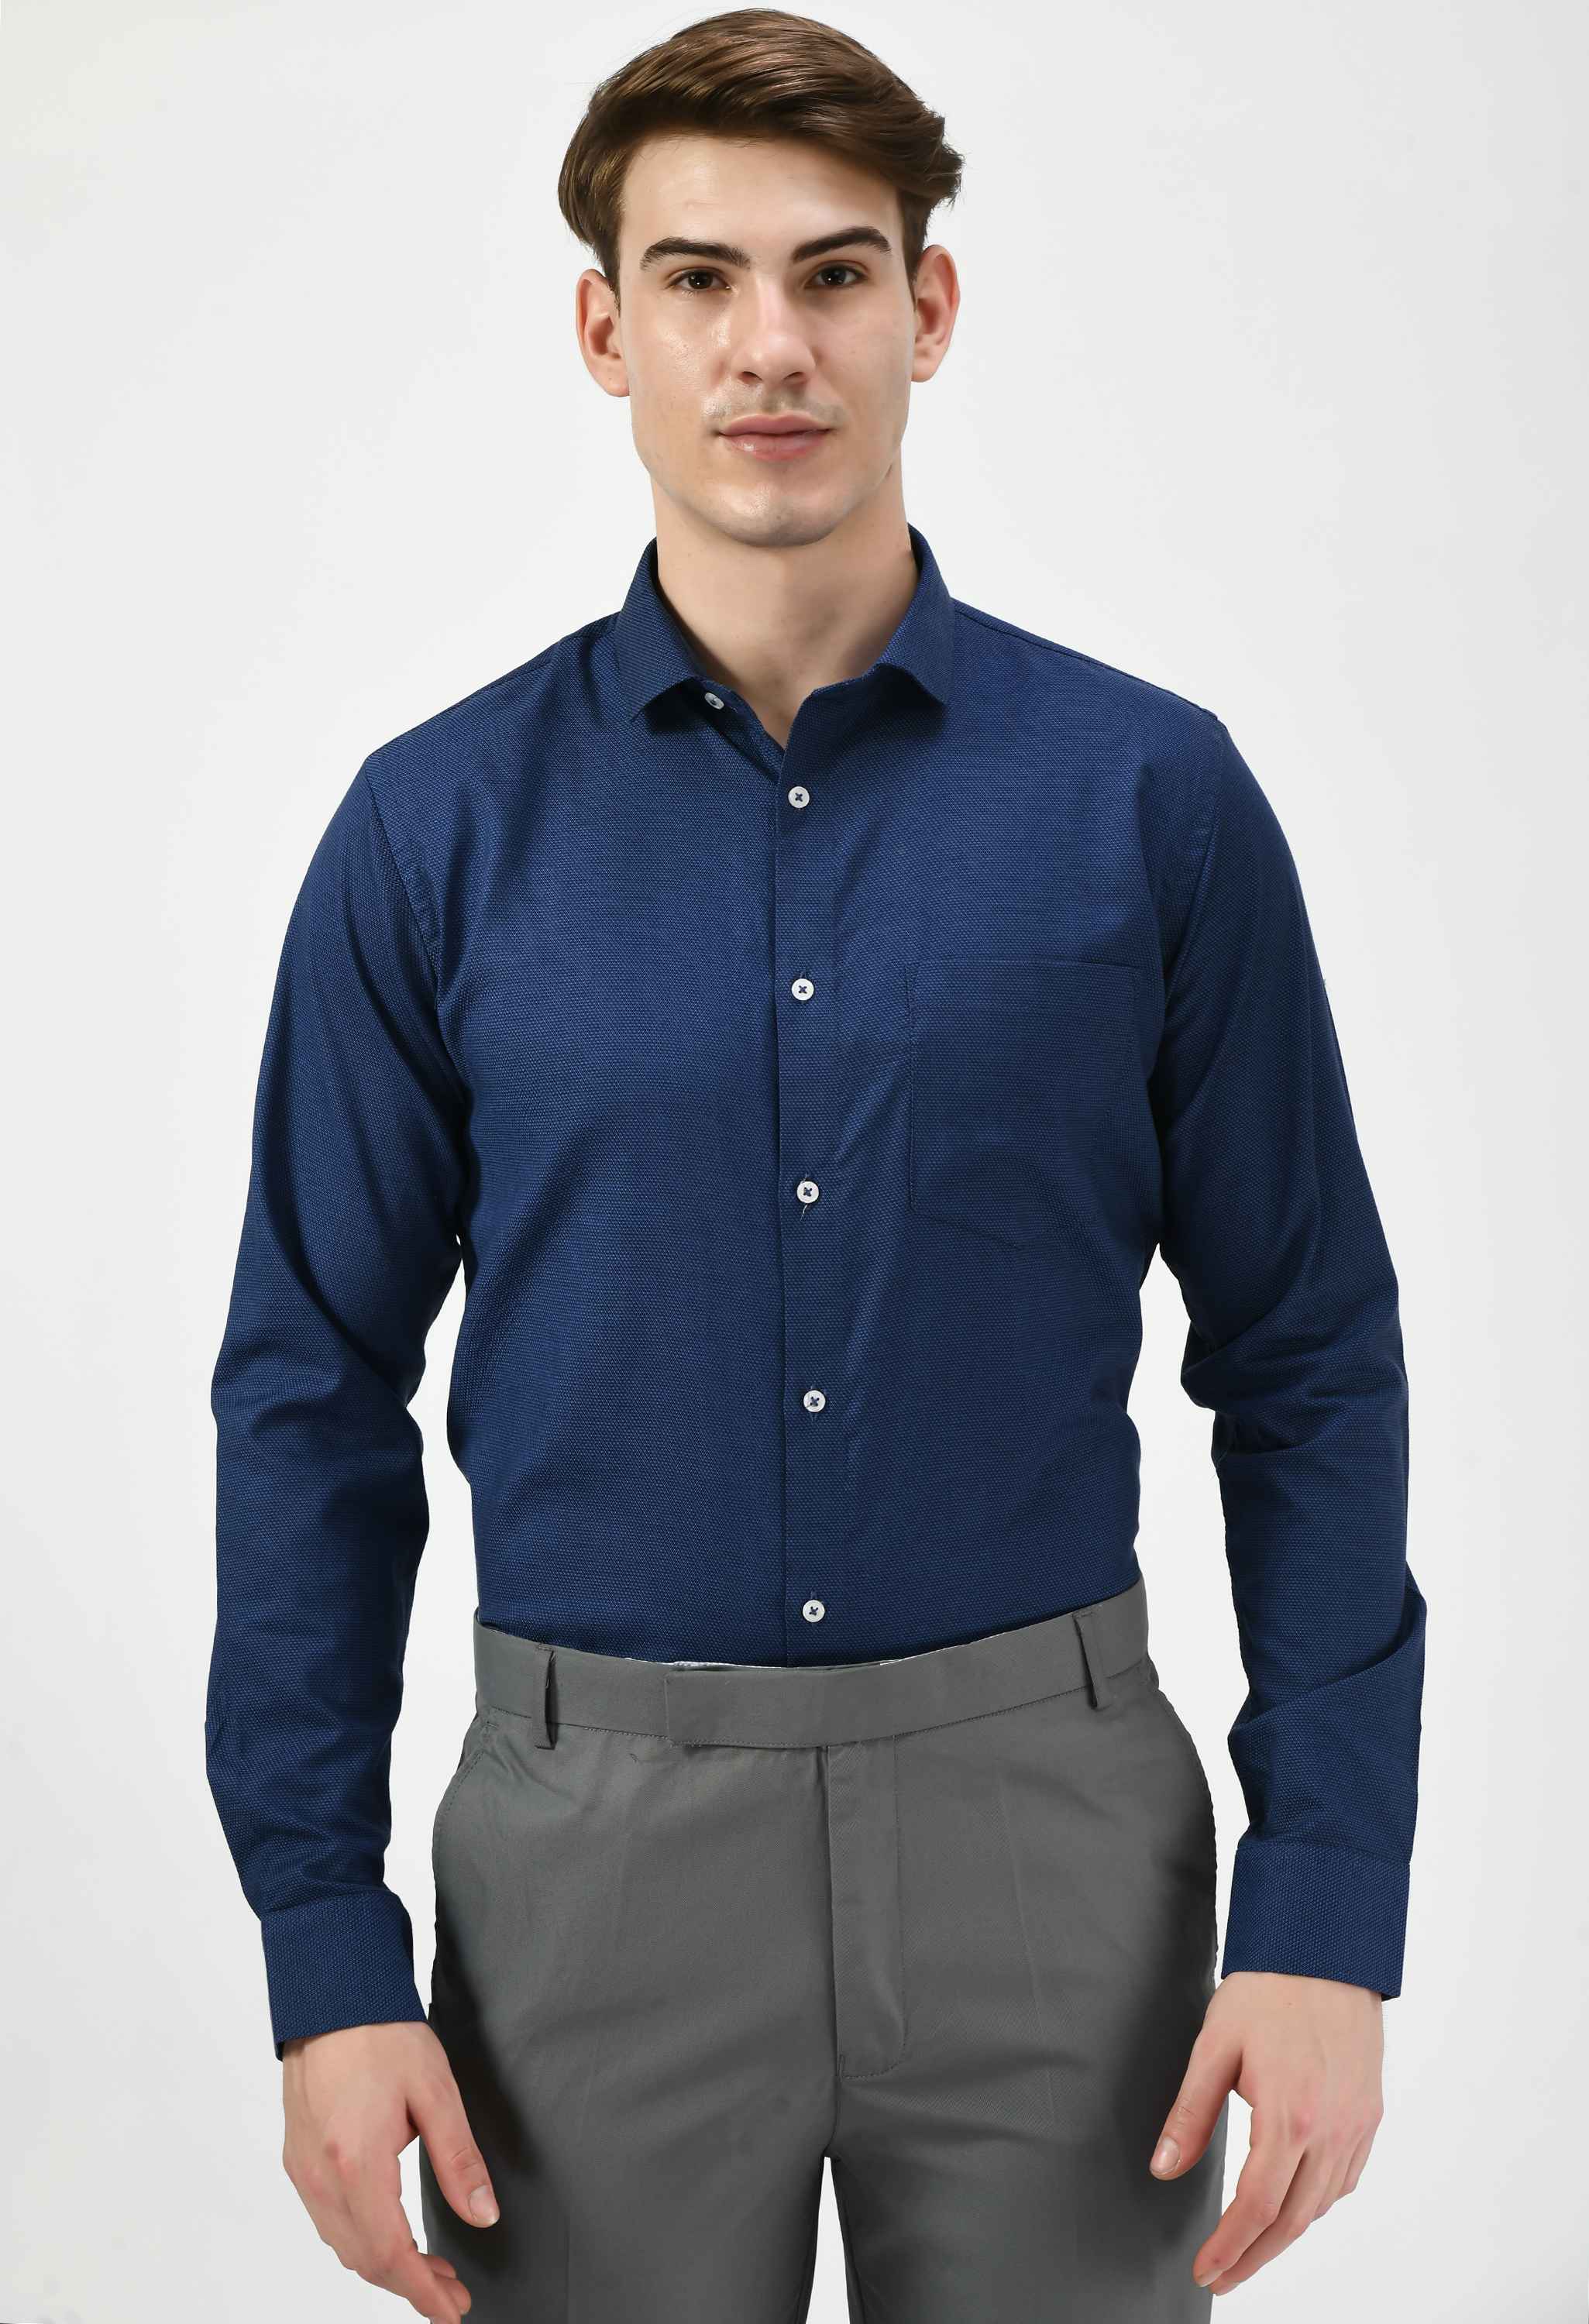 Men's Textured Cotton Full Sleeve Formal ShirtMen's Textured Cotton Full Sleeve Formal Shirt